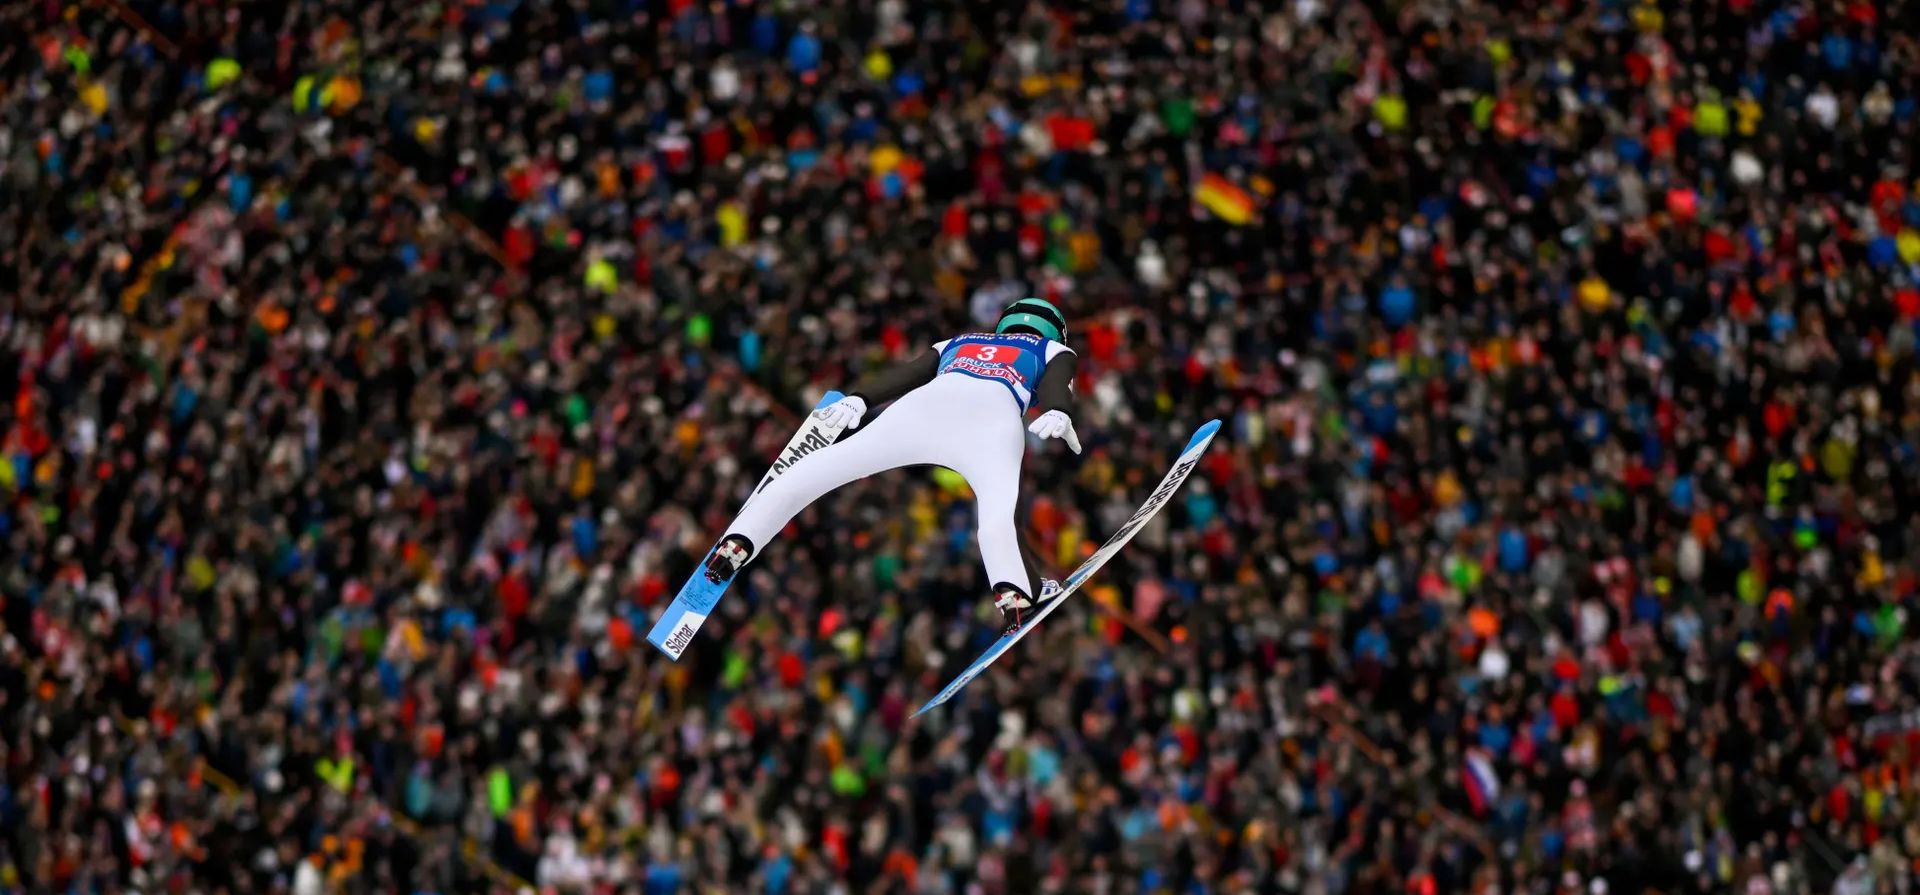 Innsbruck, Austria. Ane Lanišek de Eslovenia compite en la competencia de salto de esquí Four Hills. Fotografía: Daniel Kopatsch/Getty Images